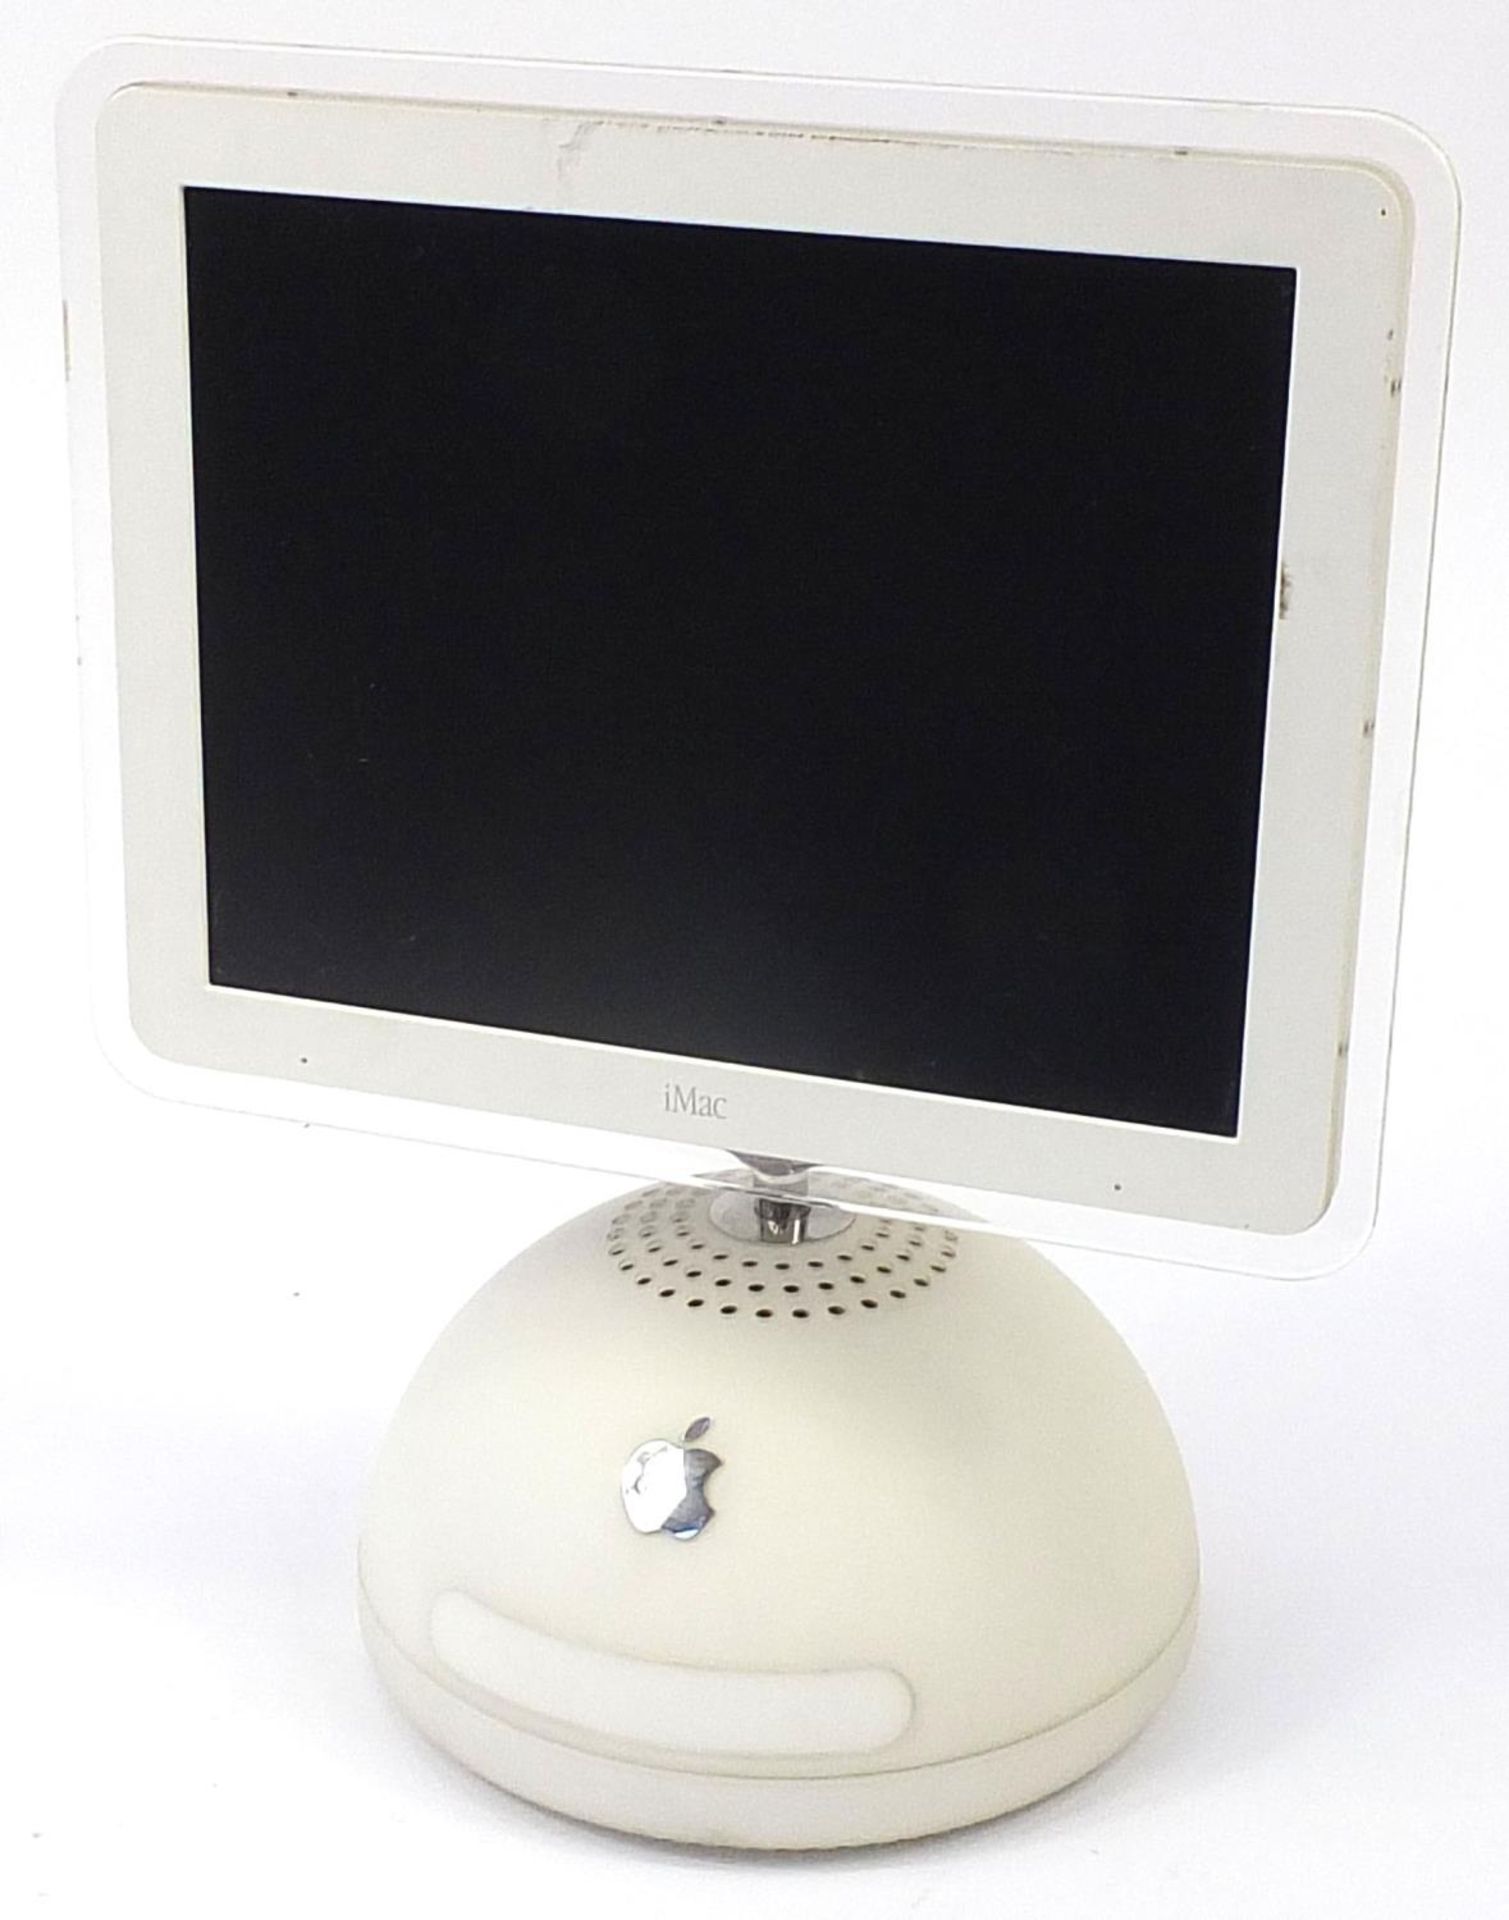 Vintage Apple iMac computer with adjustable screen, model M6498